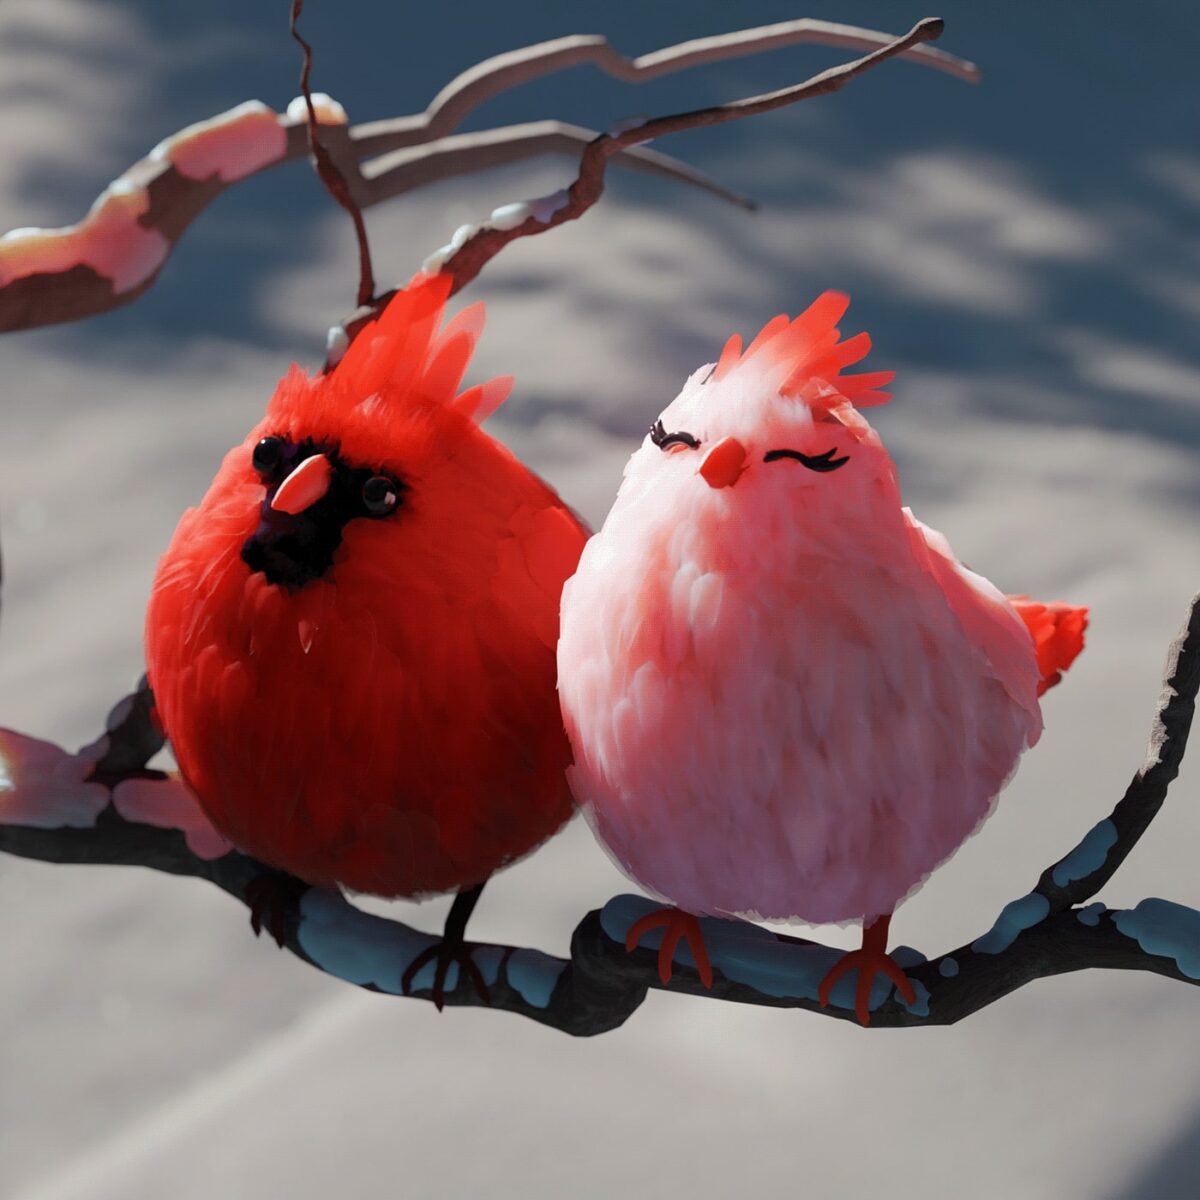 Fat Birds: an amusing 3D illustration series by Marcus Penna